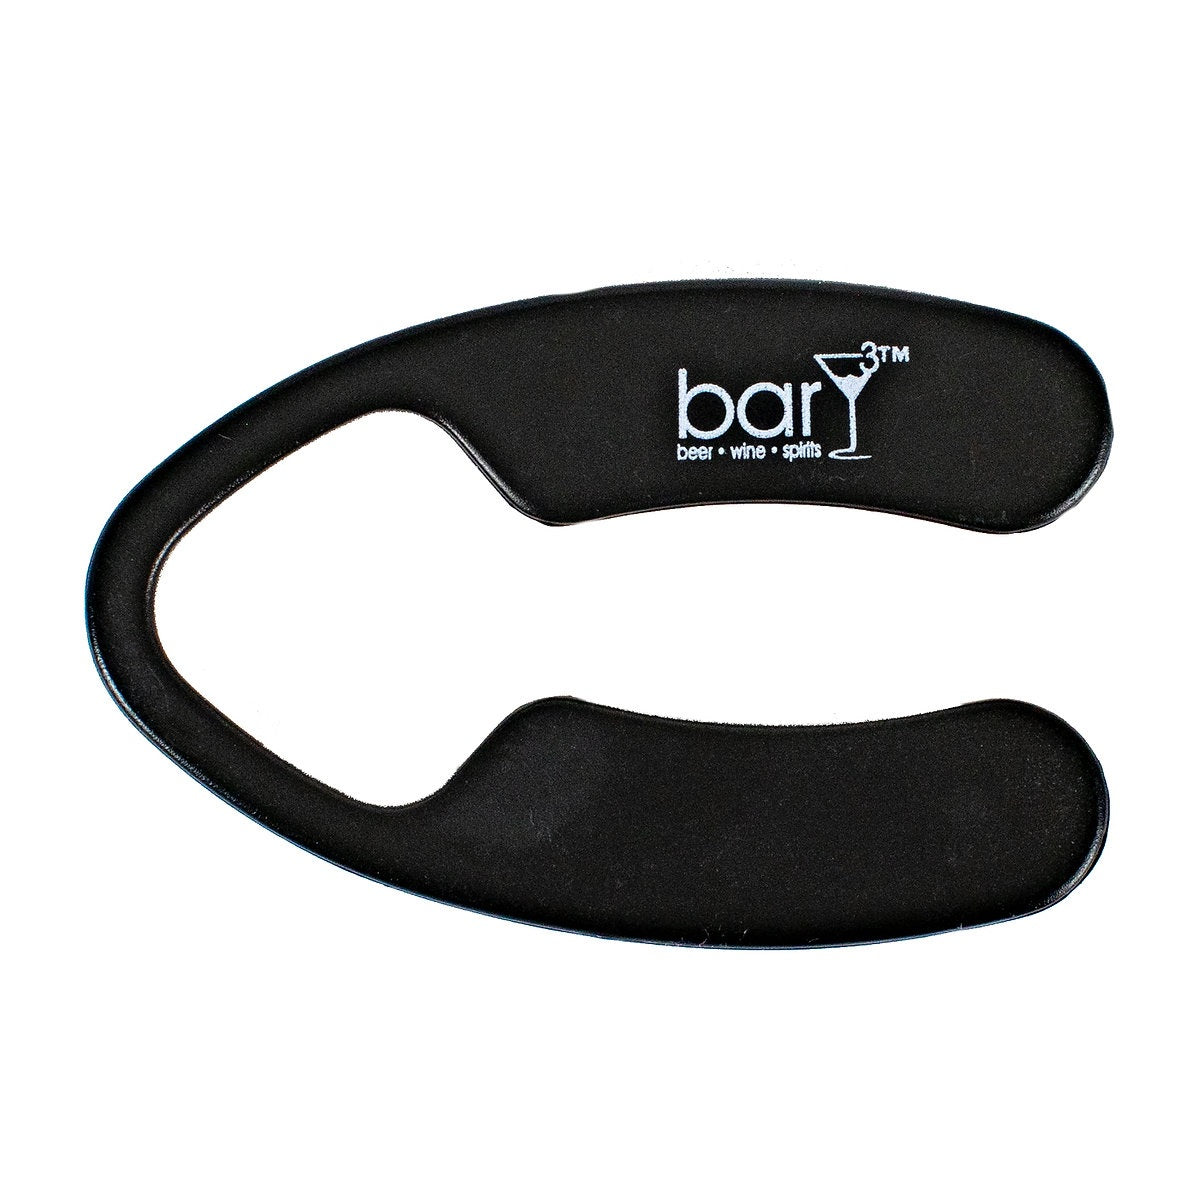 BarY3 BAR-0748 Foil Cutter, Black